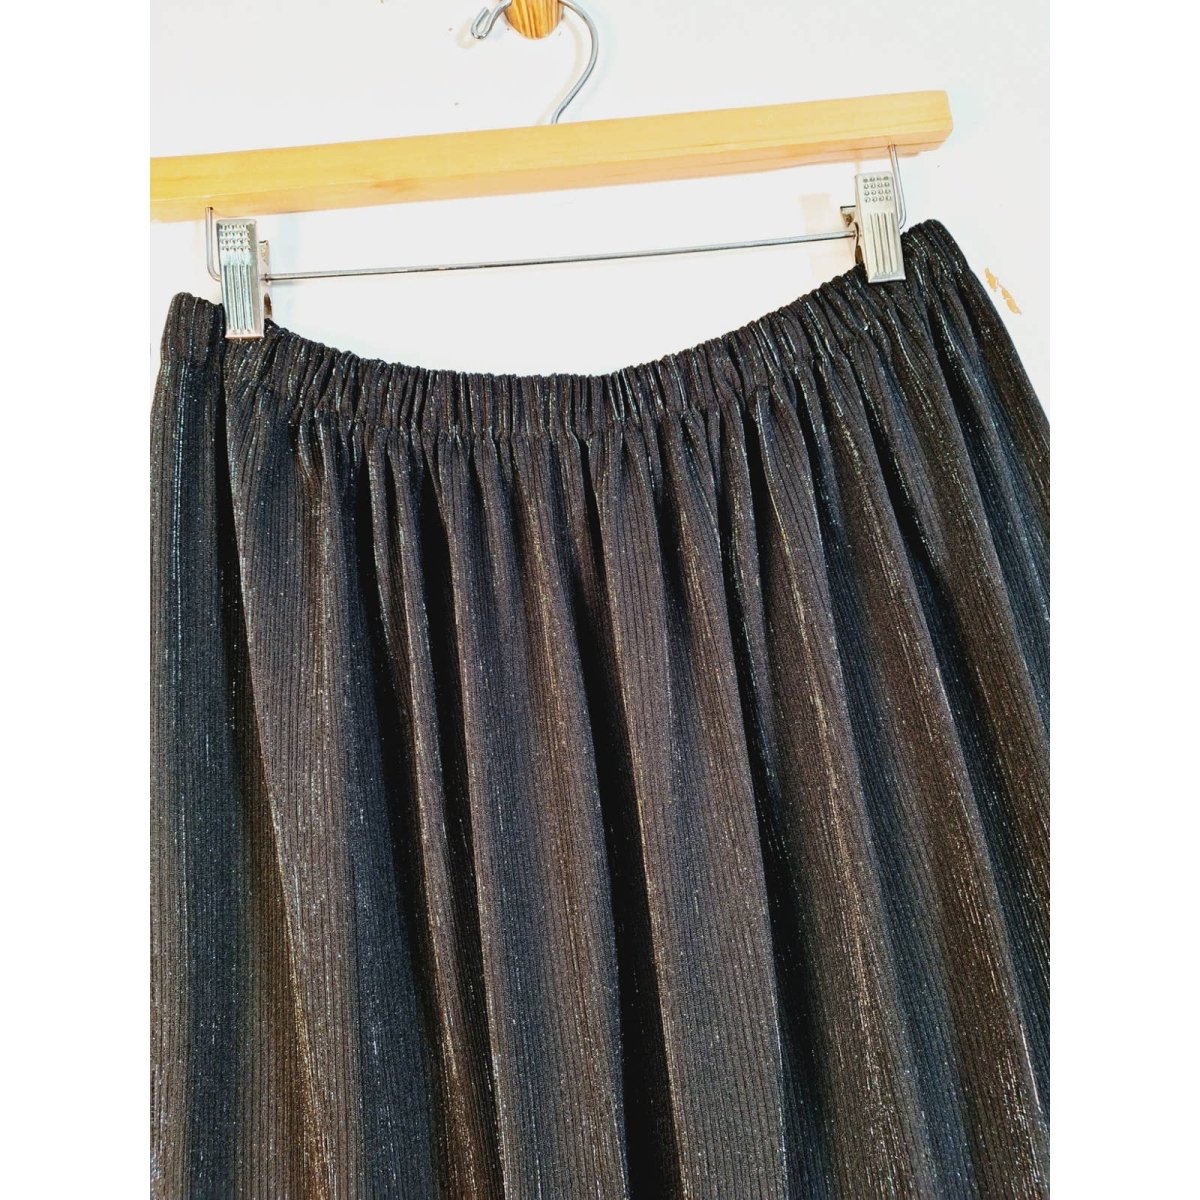 Vintage 70s/80s Homemade Black/Silver Metallic Midi Skirt Size O/S Waist 30-44 - themallvintage The Mall Vintage